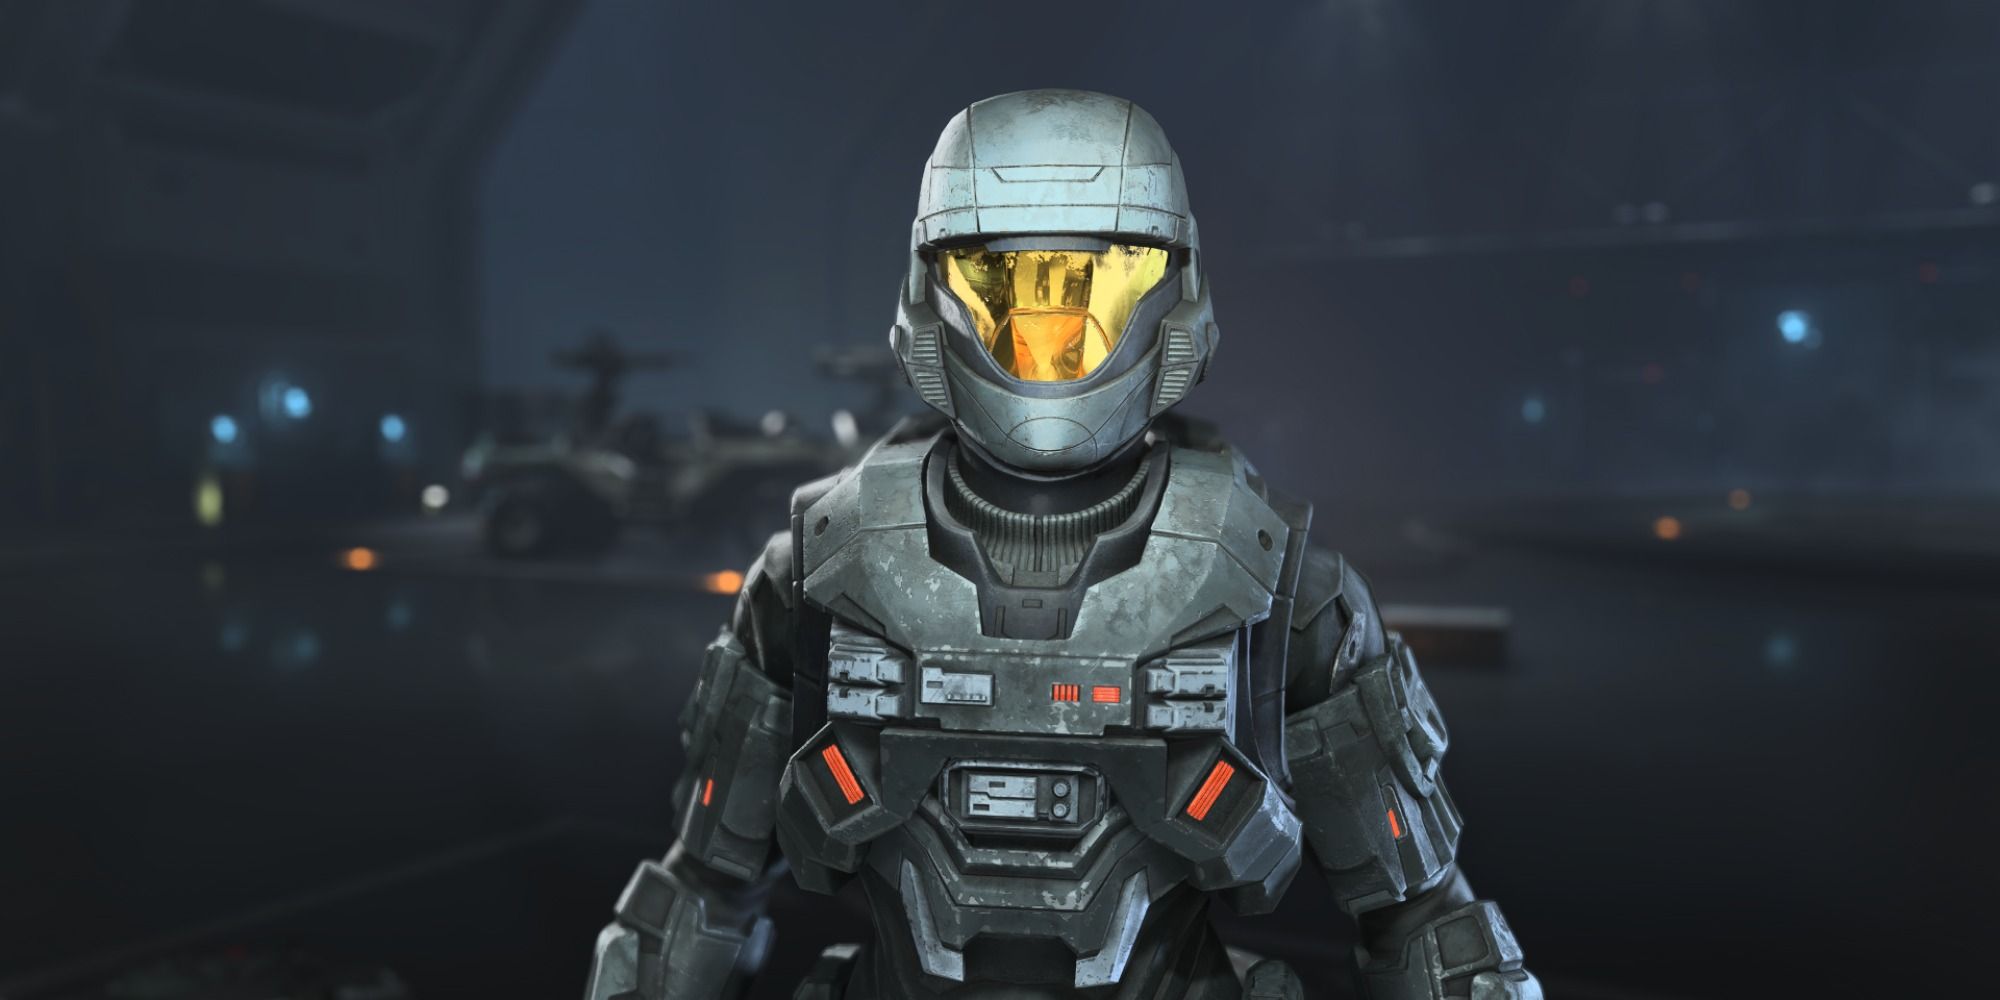 The ODST Helmet in Halo Infinite